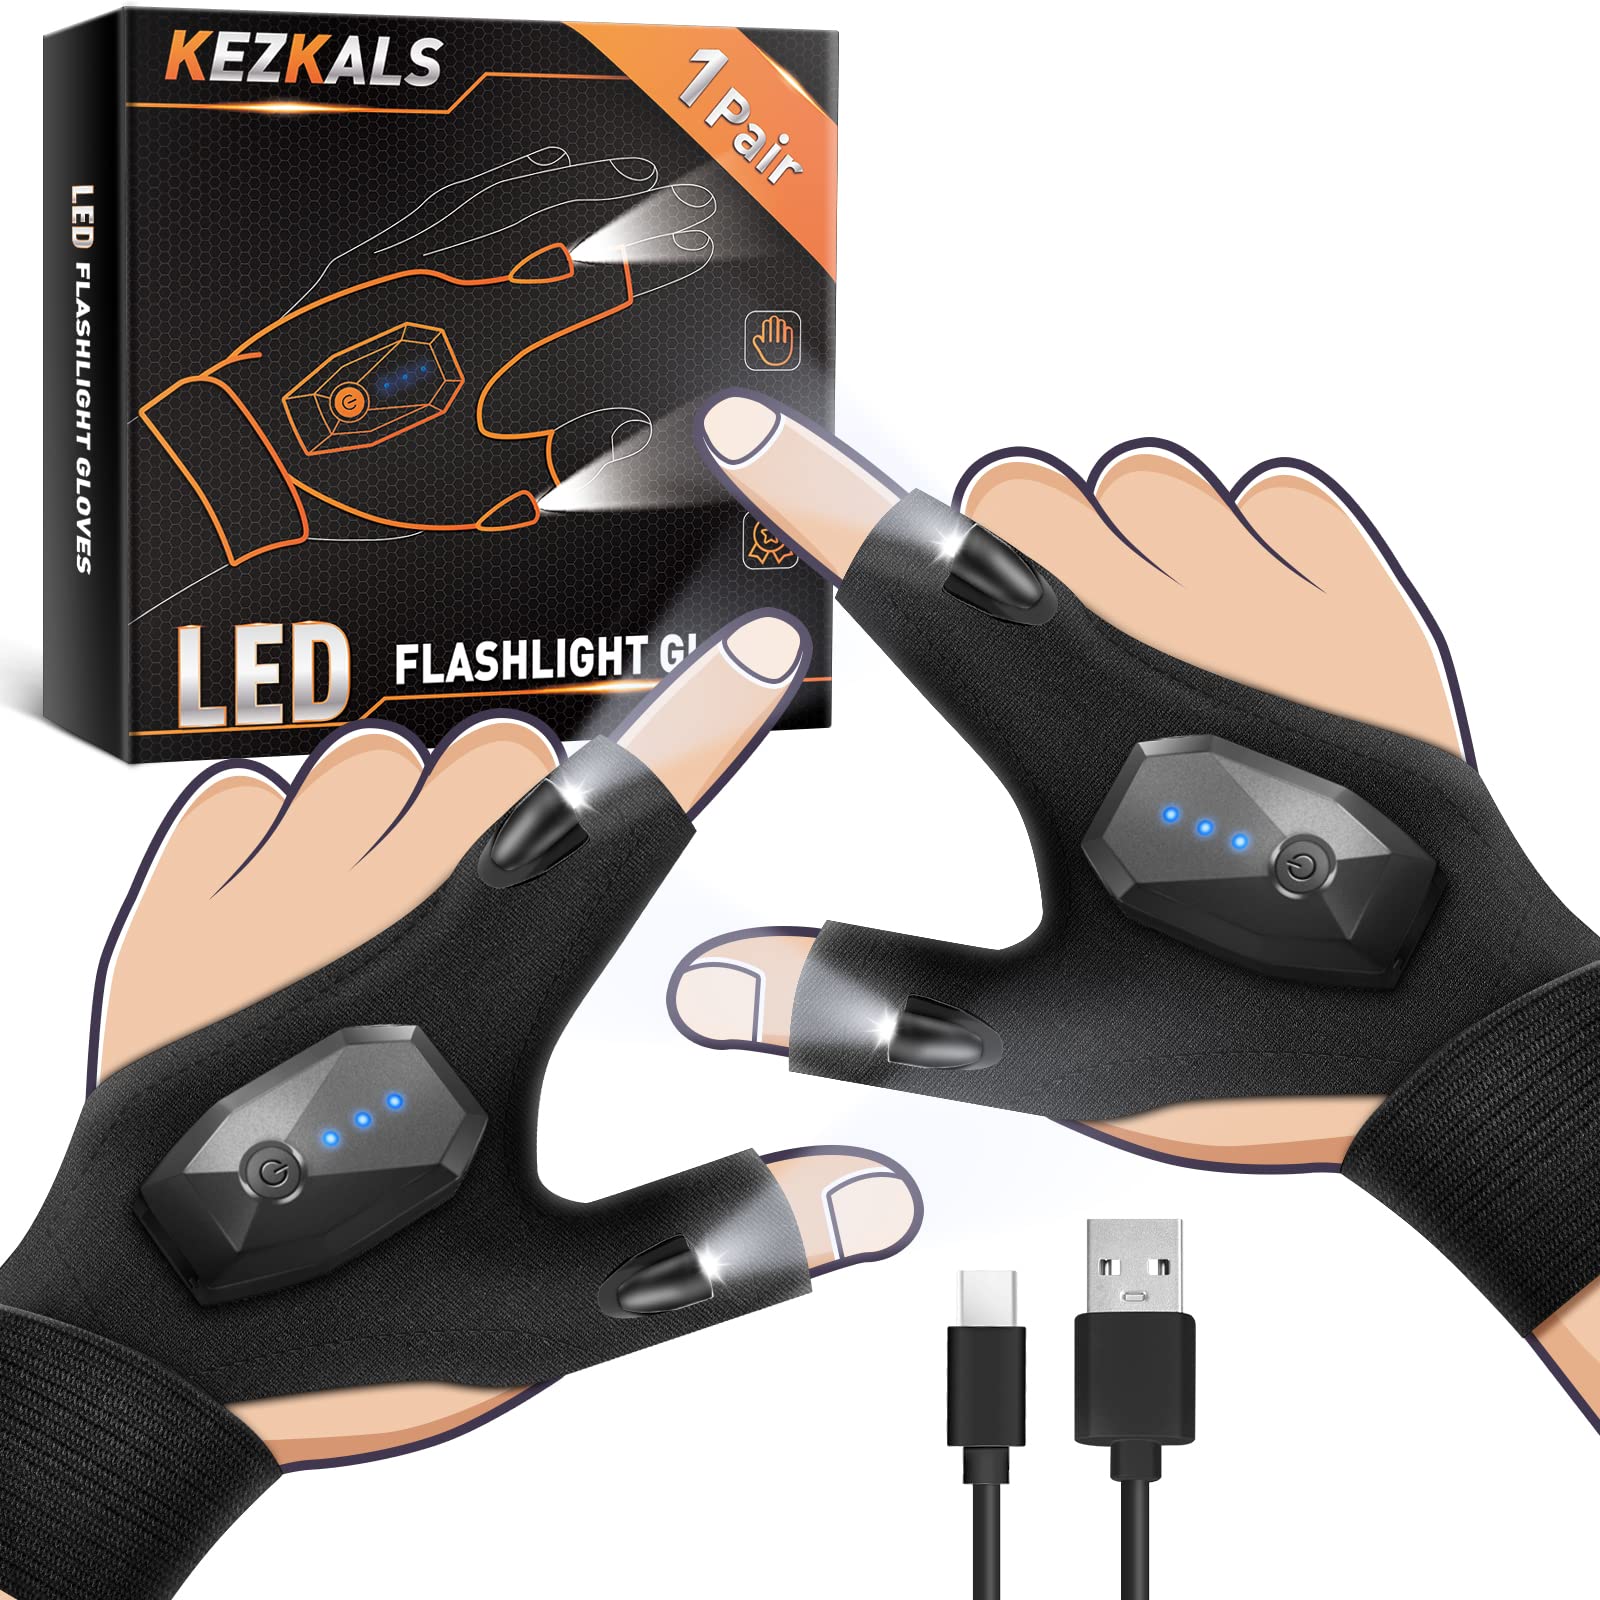 KEZKALS Gifts for Men, LED Rechargeable Flashlight Gloves, Cool